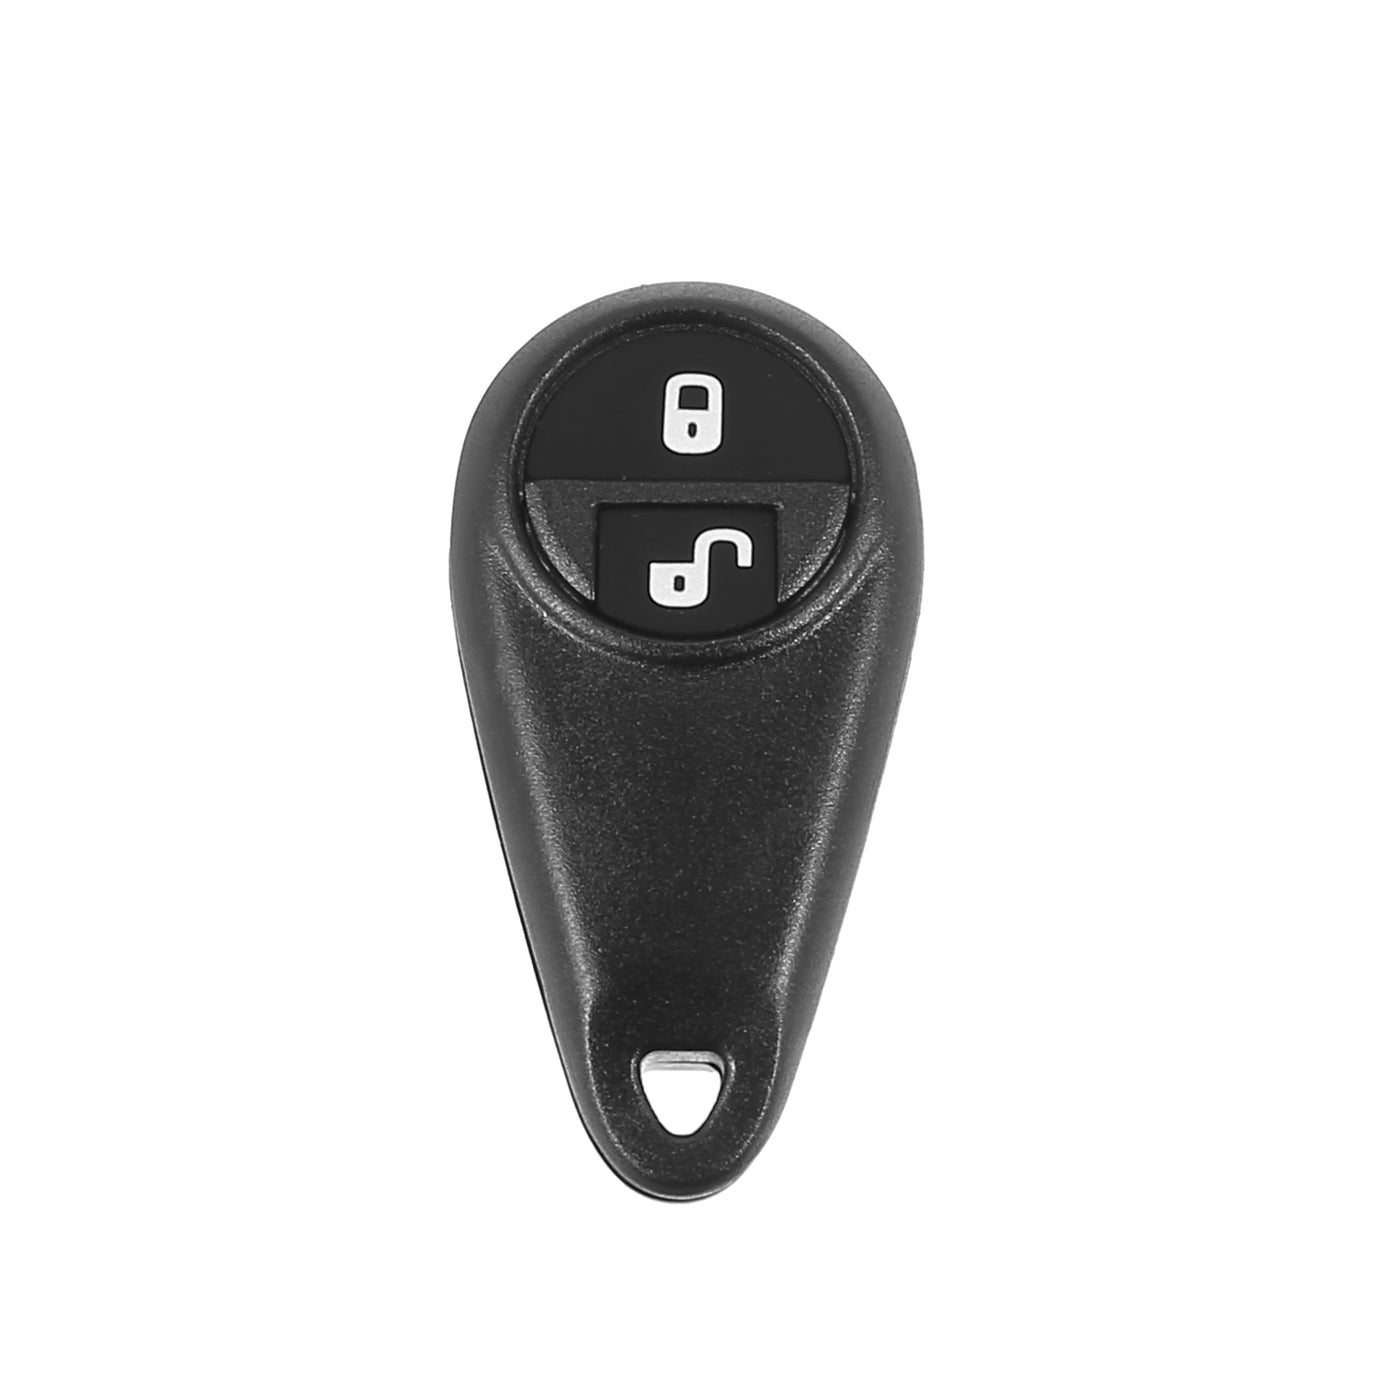 X AUTOHAUX 2 Button Car Keyless Entry Remote Control Key Fob Proximity Smart Fob NHVWB1U711 for Subaru Forester Impreza 2005-2007 433MHz